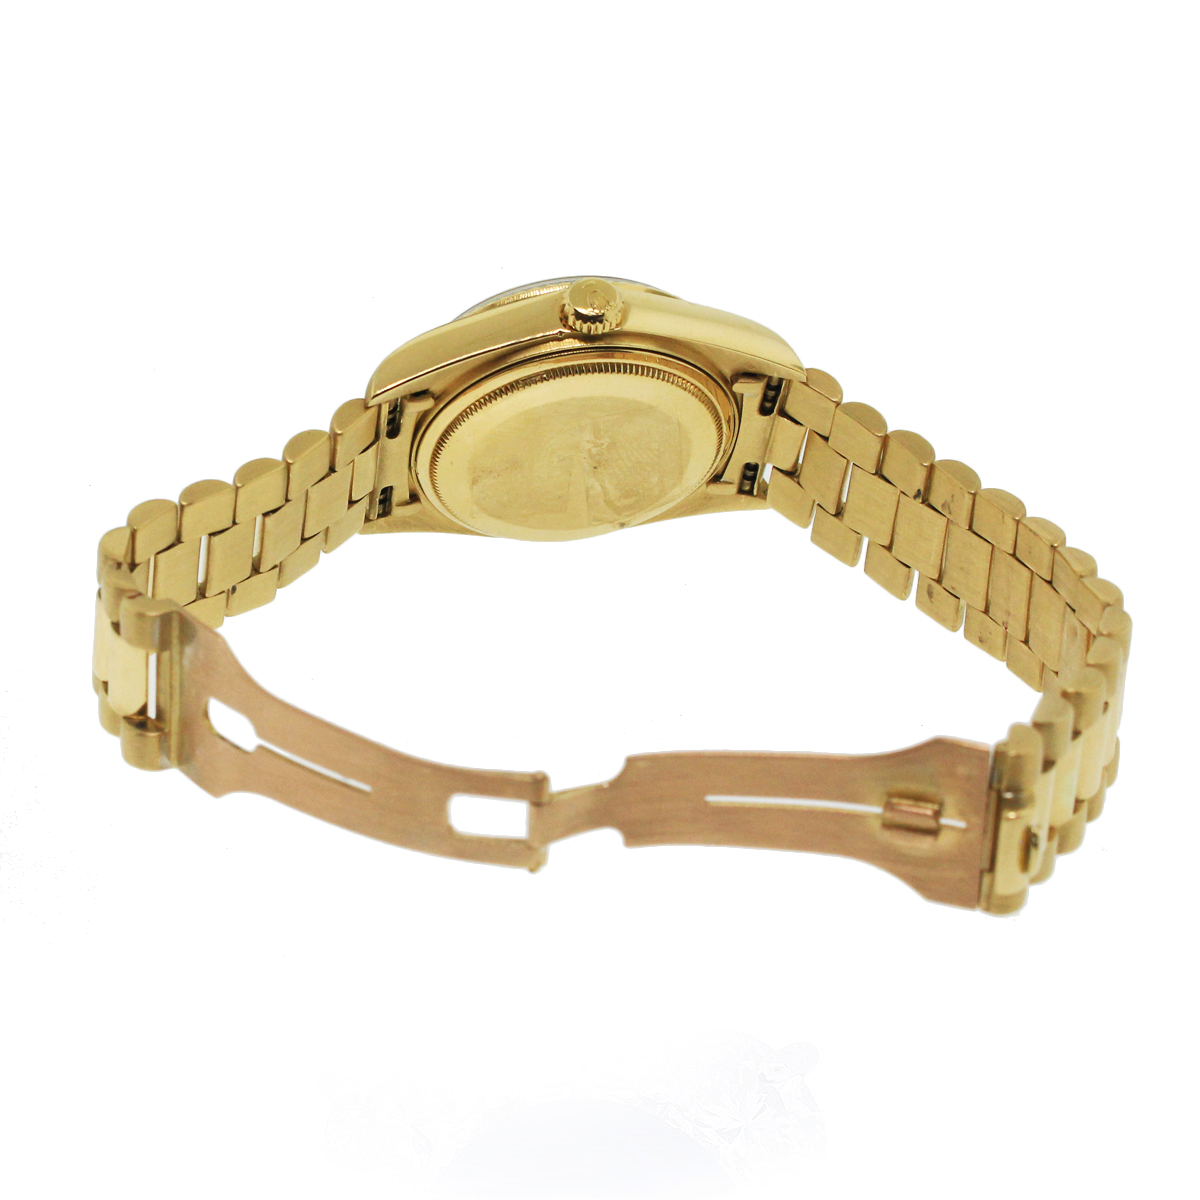 Rolex 18038 Day-Date 18k Yellow Gold Presidential Bracelet Watch